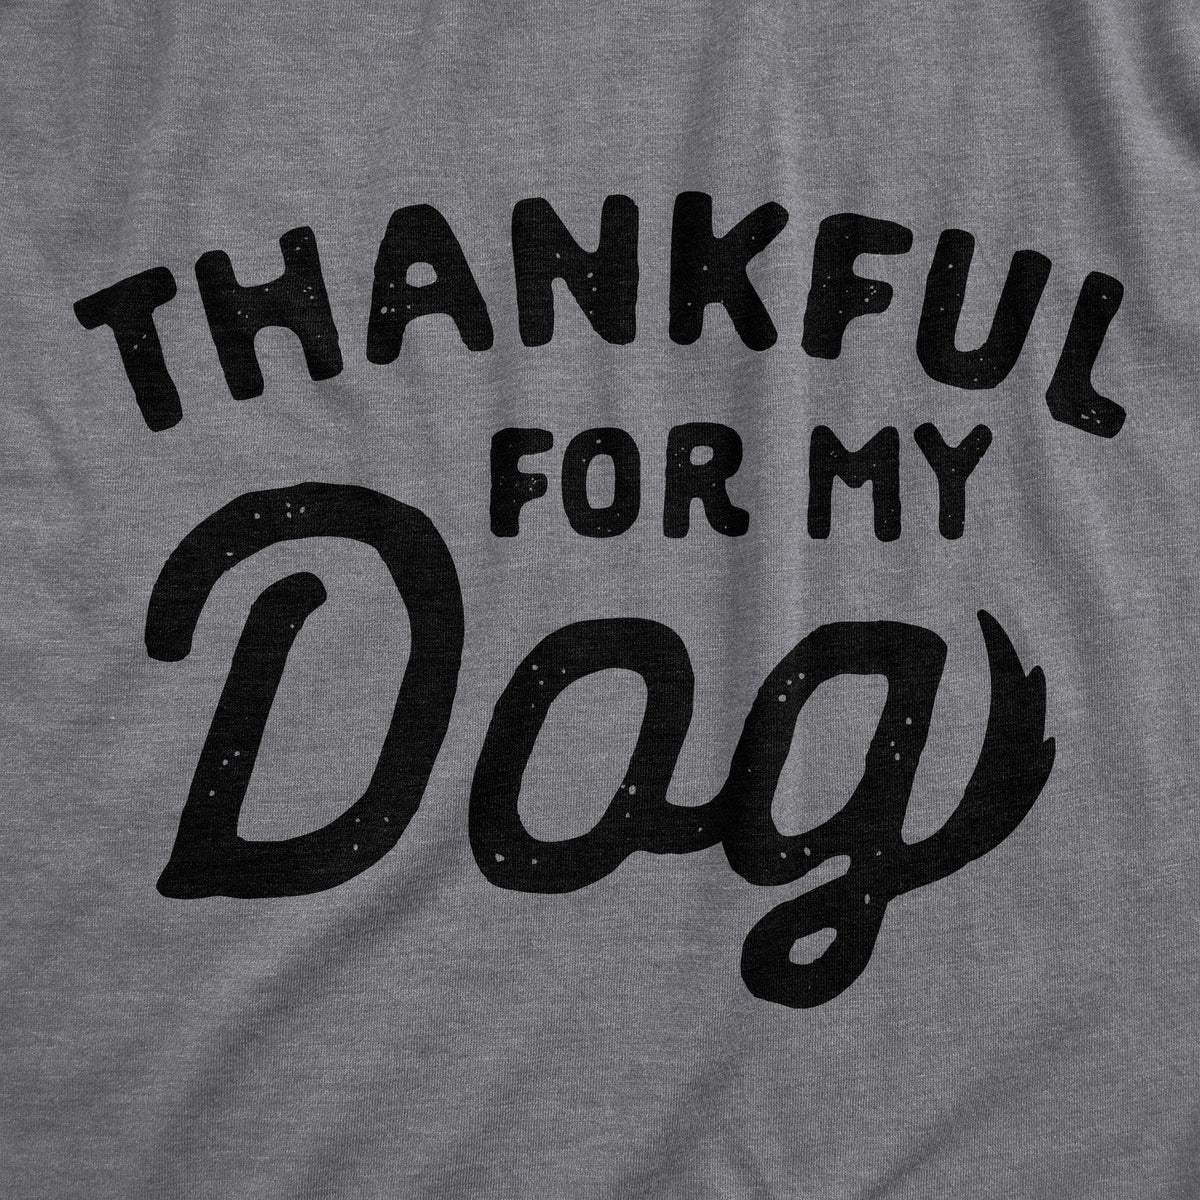 Thankful For My Dog Men&#39;s Tshirt - Crazy Dog T-Shirts